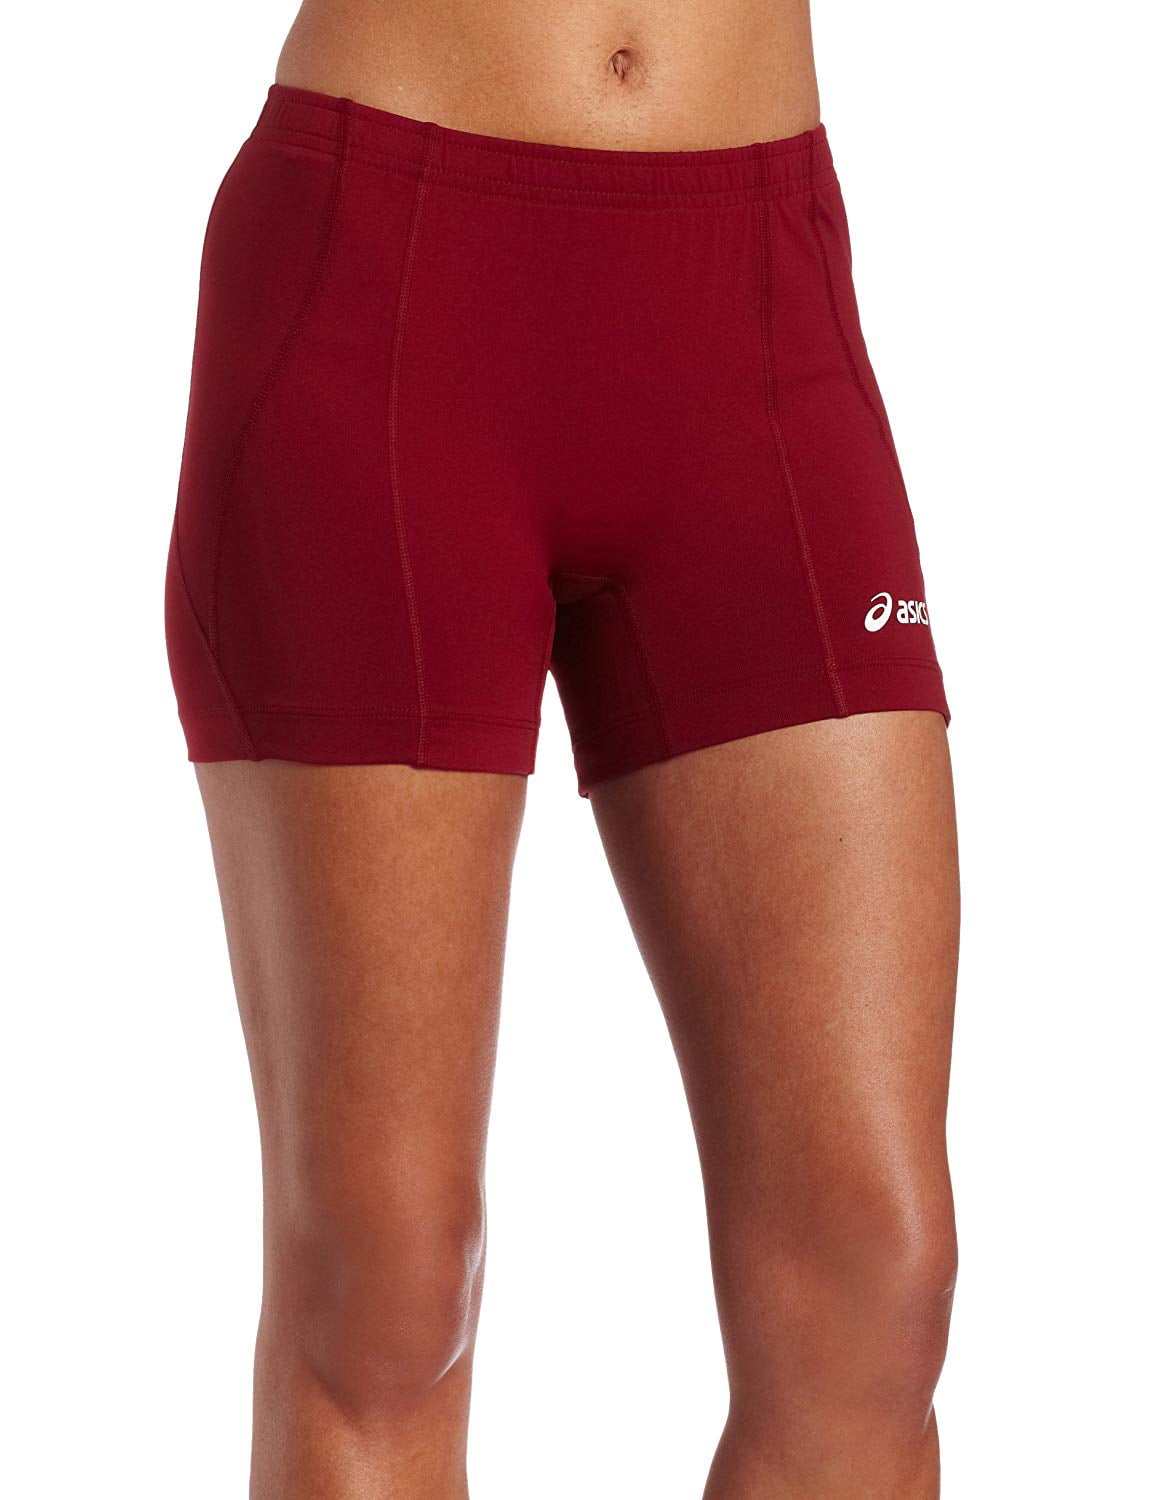 ASICS Women's Baseline Volleyball Shorts, Cardinal, Medium Walmart